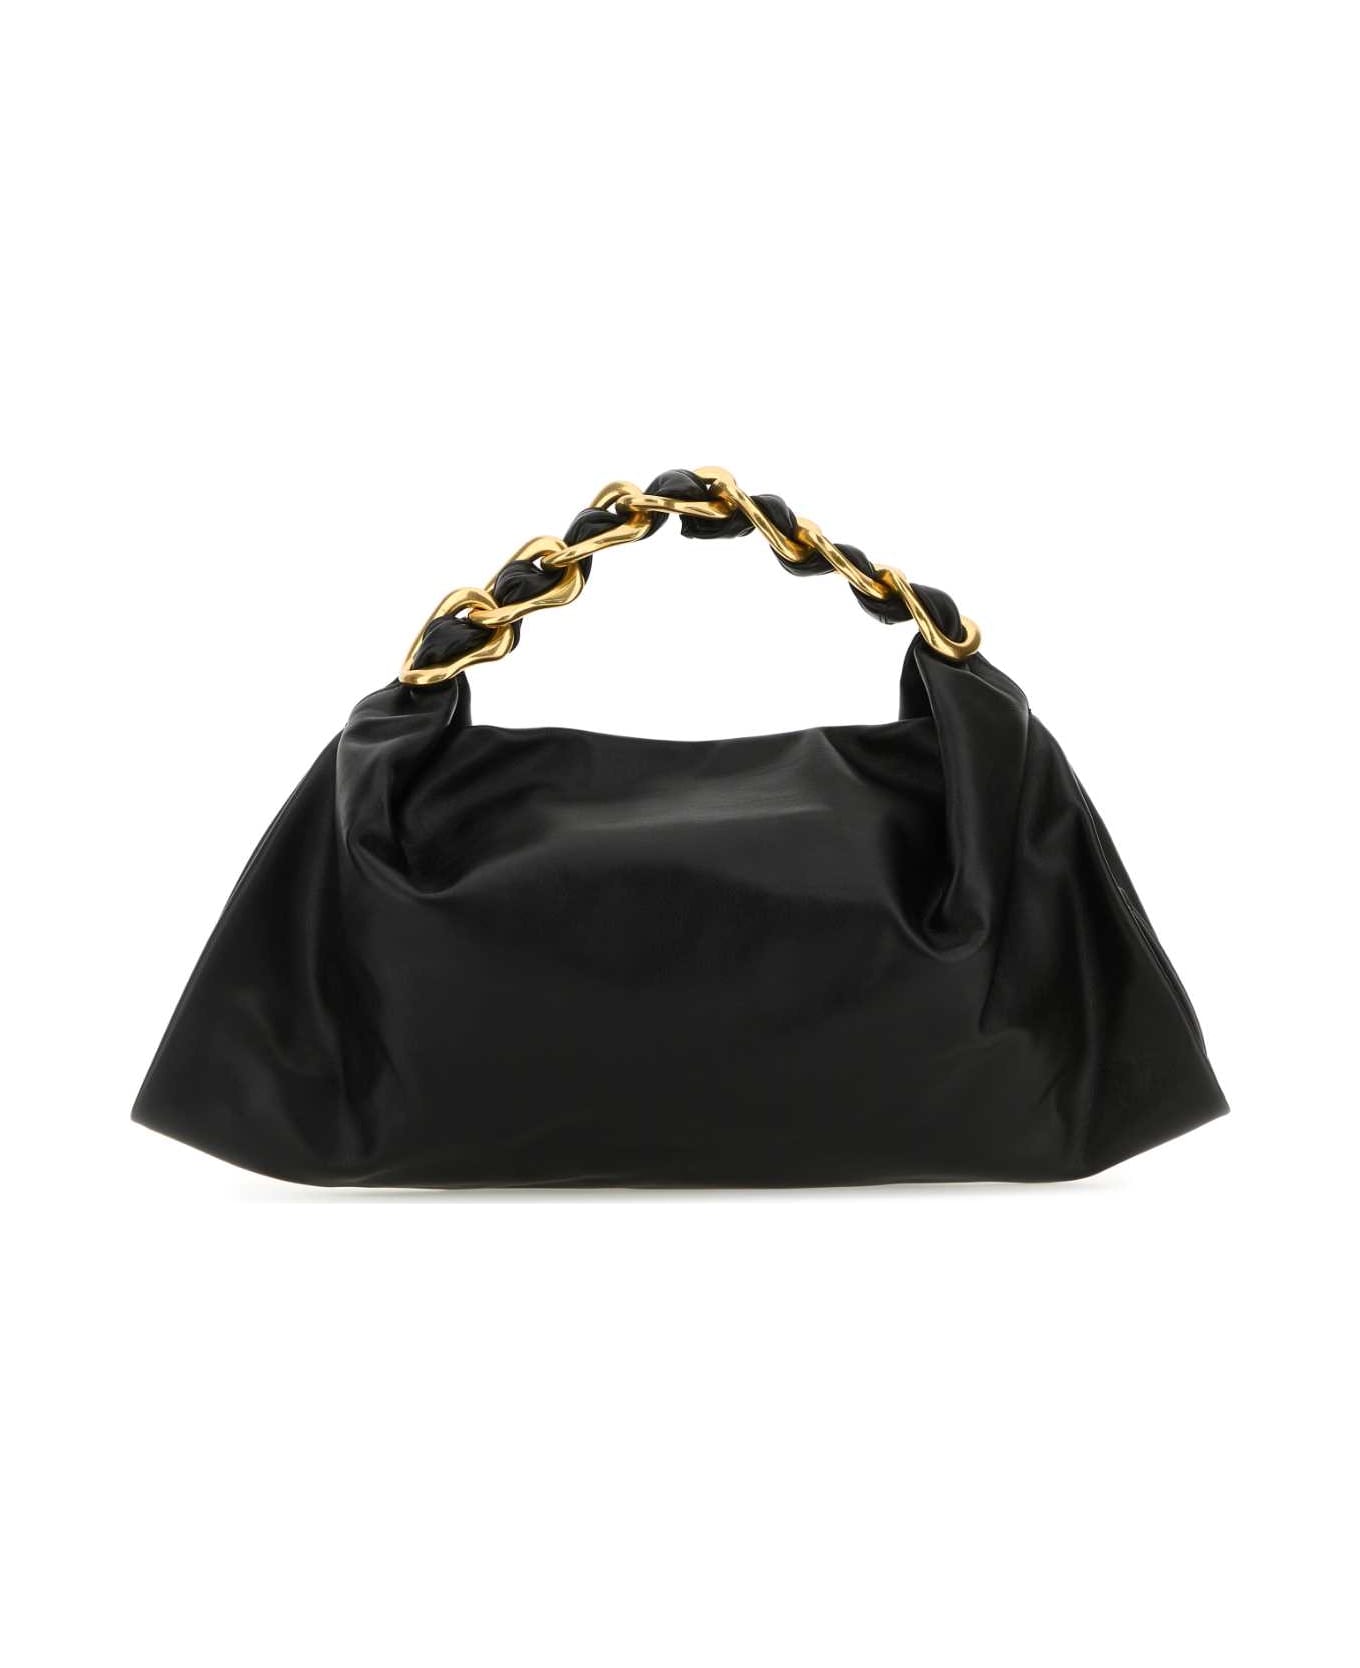 Burberry Black Leather Medium Swan Handbag - BLACK トートバッグ